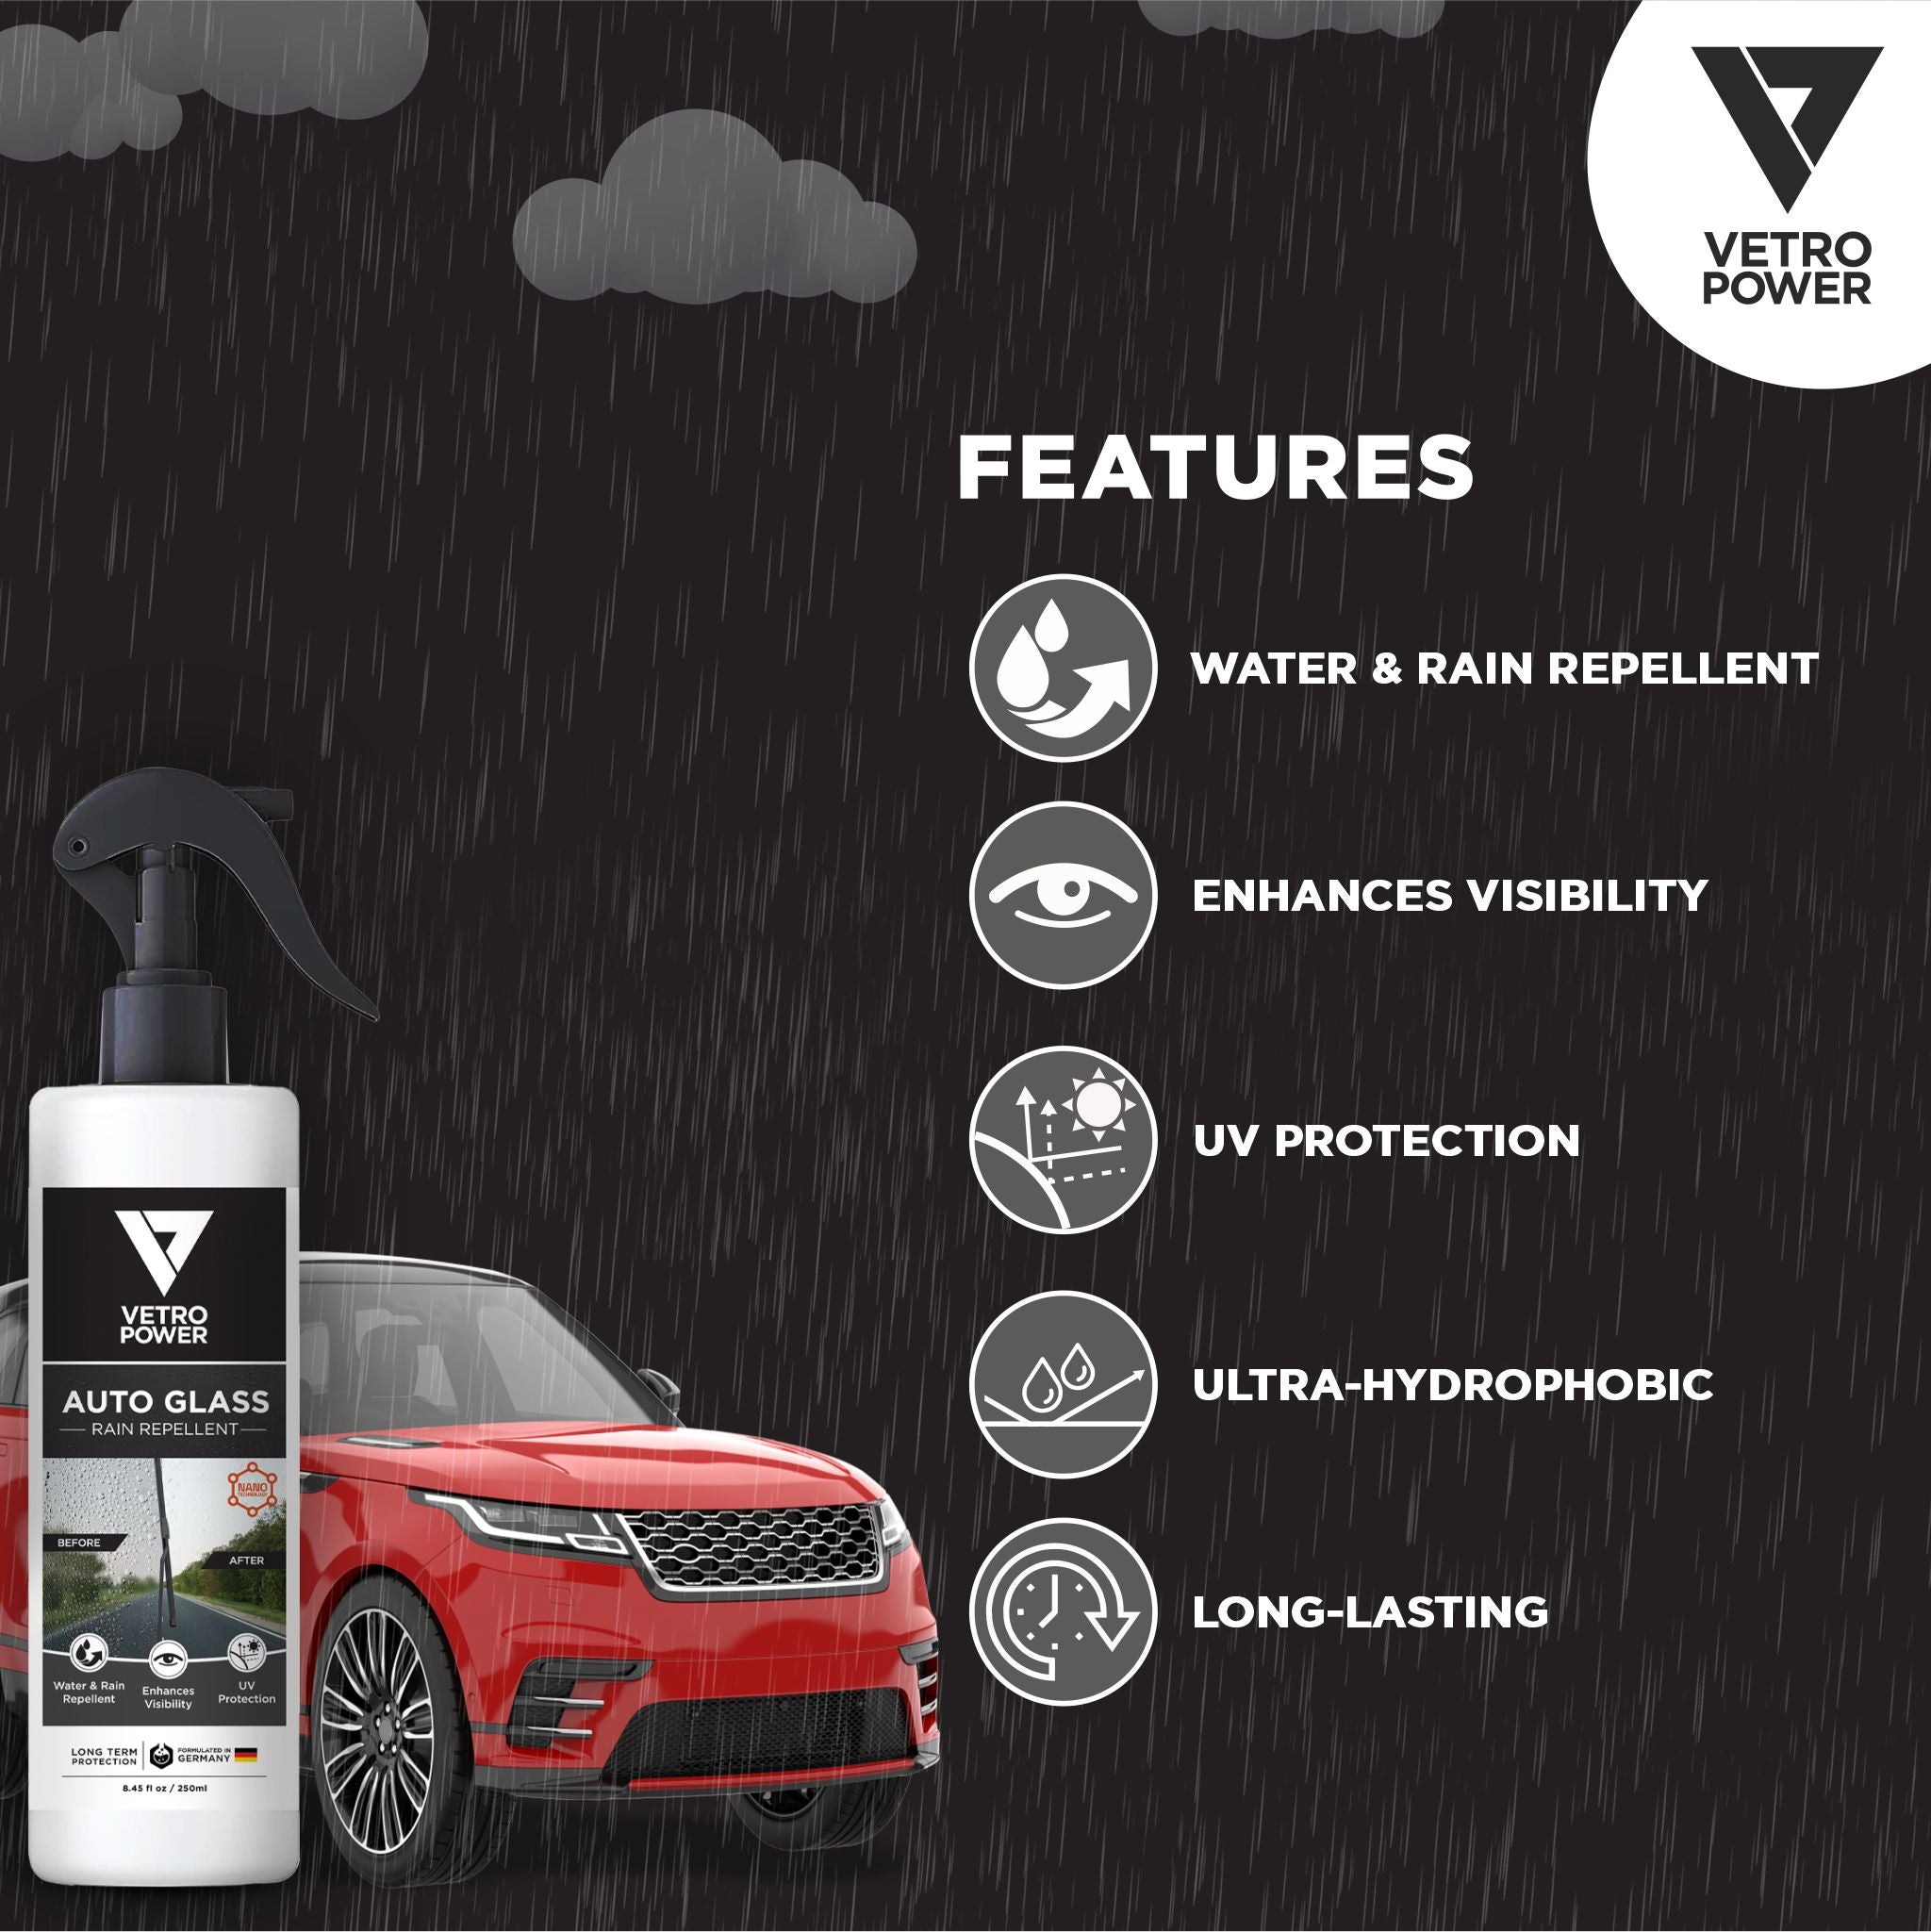 Vetro Power Auto Glass Rain Repellent Spray